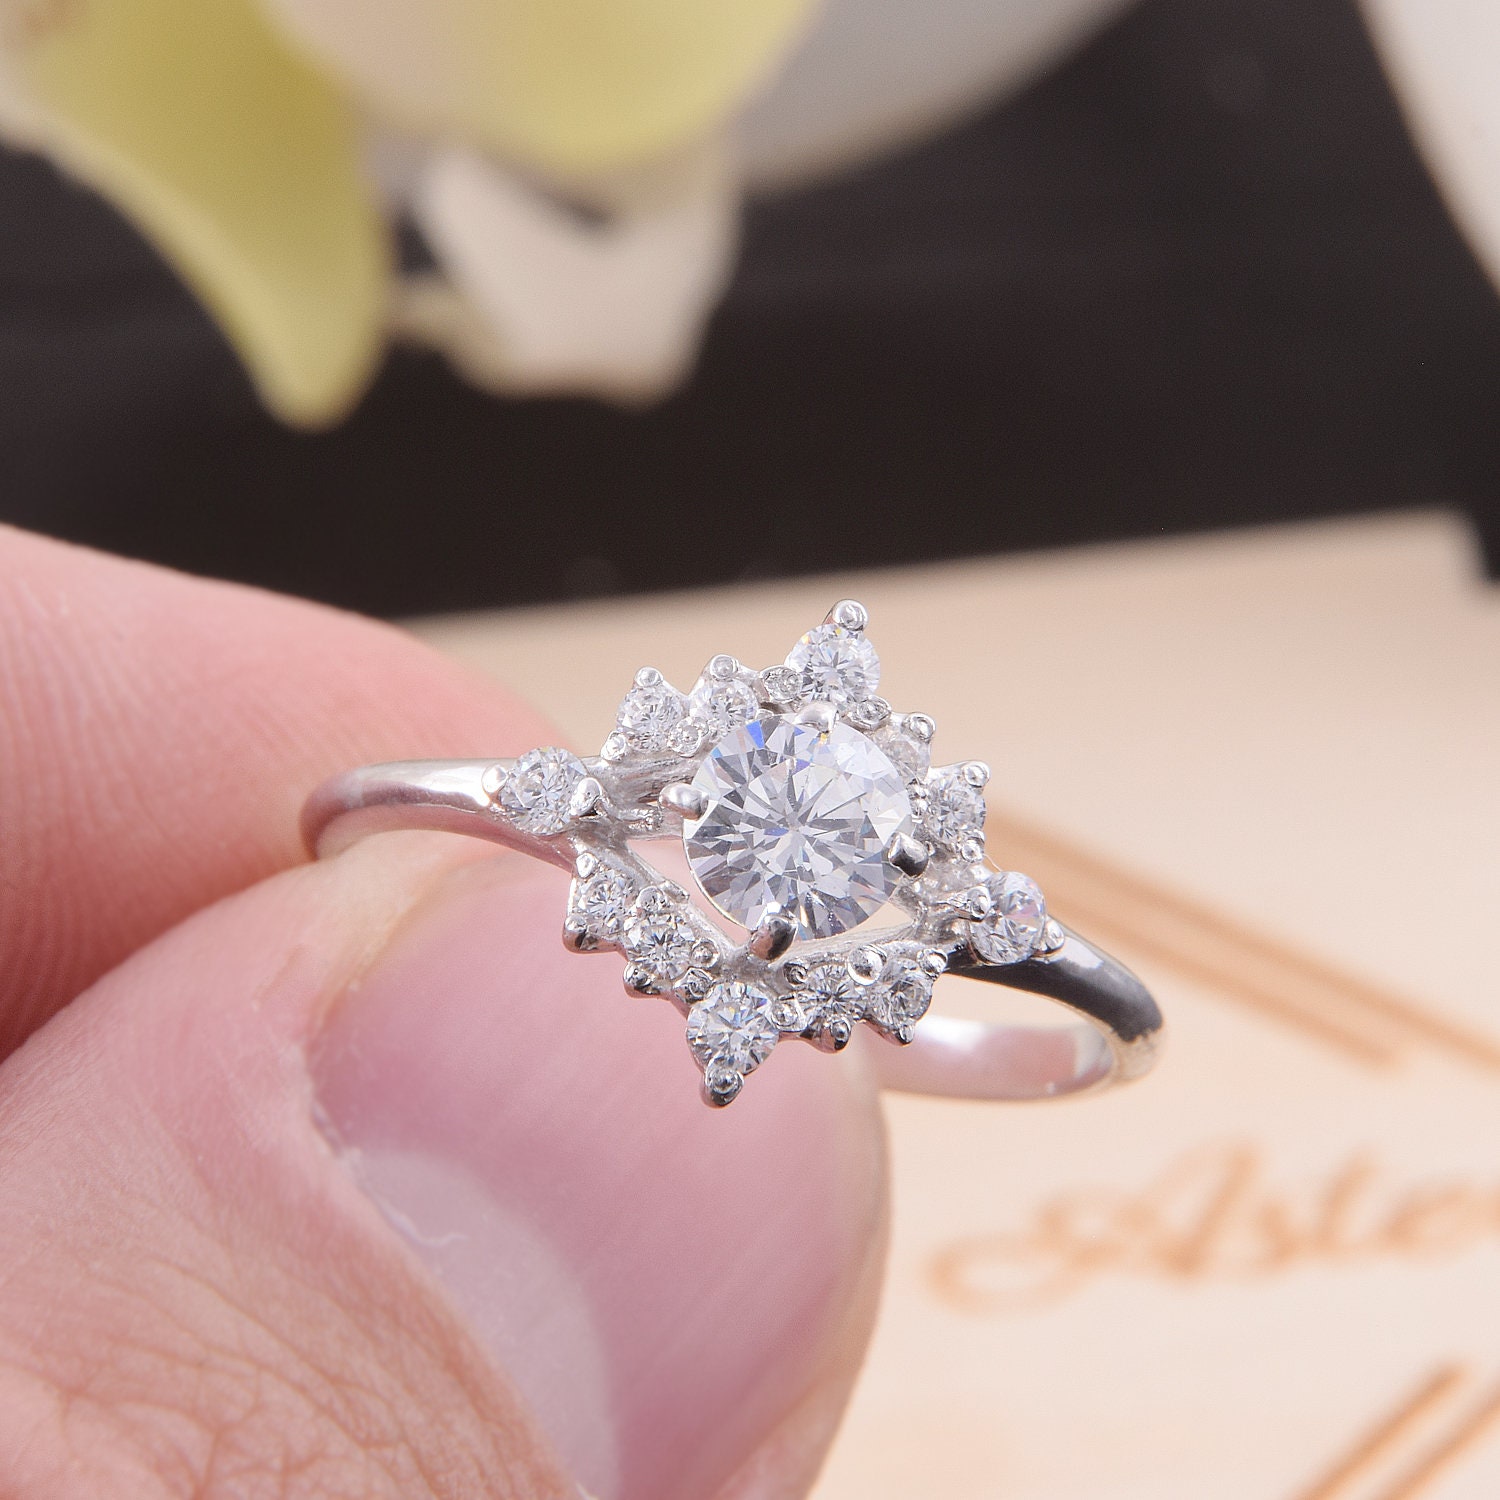 Details about   Art Deco 925 Silver 2.28 Ct Round White Diamond Vintage Victorian Antique Ring 8 